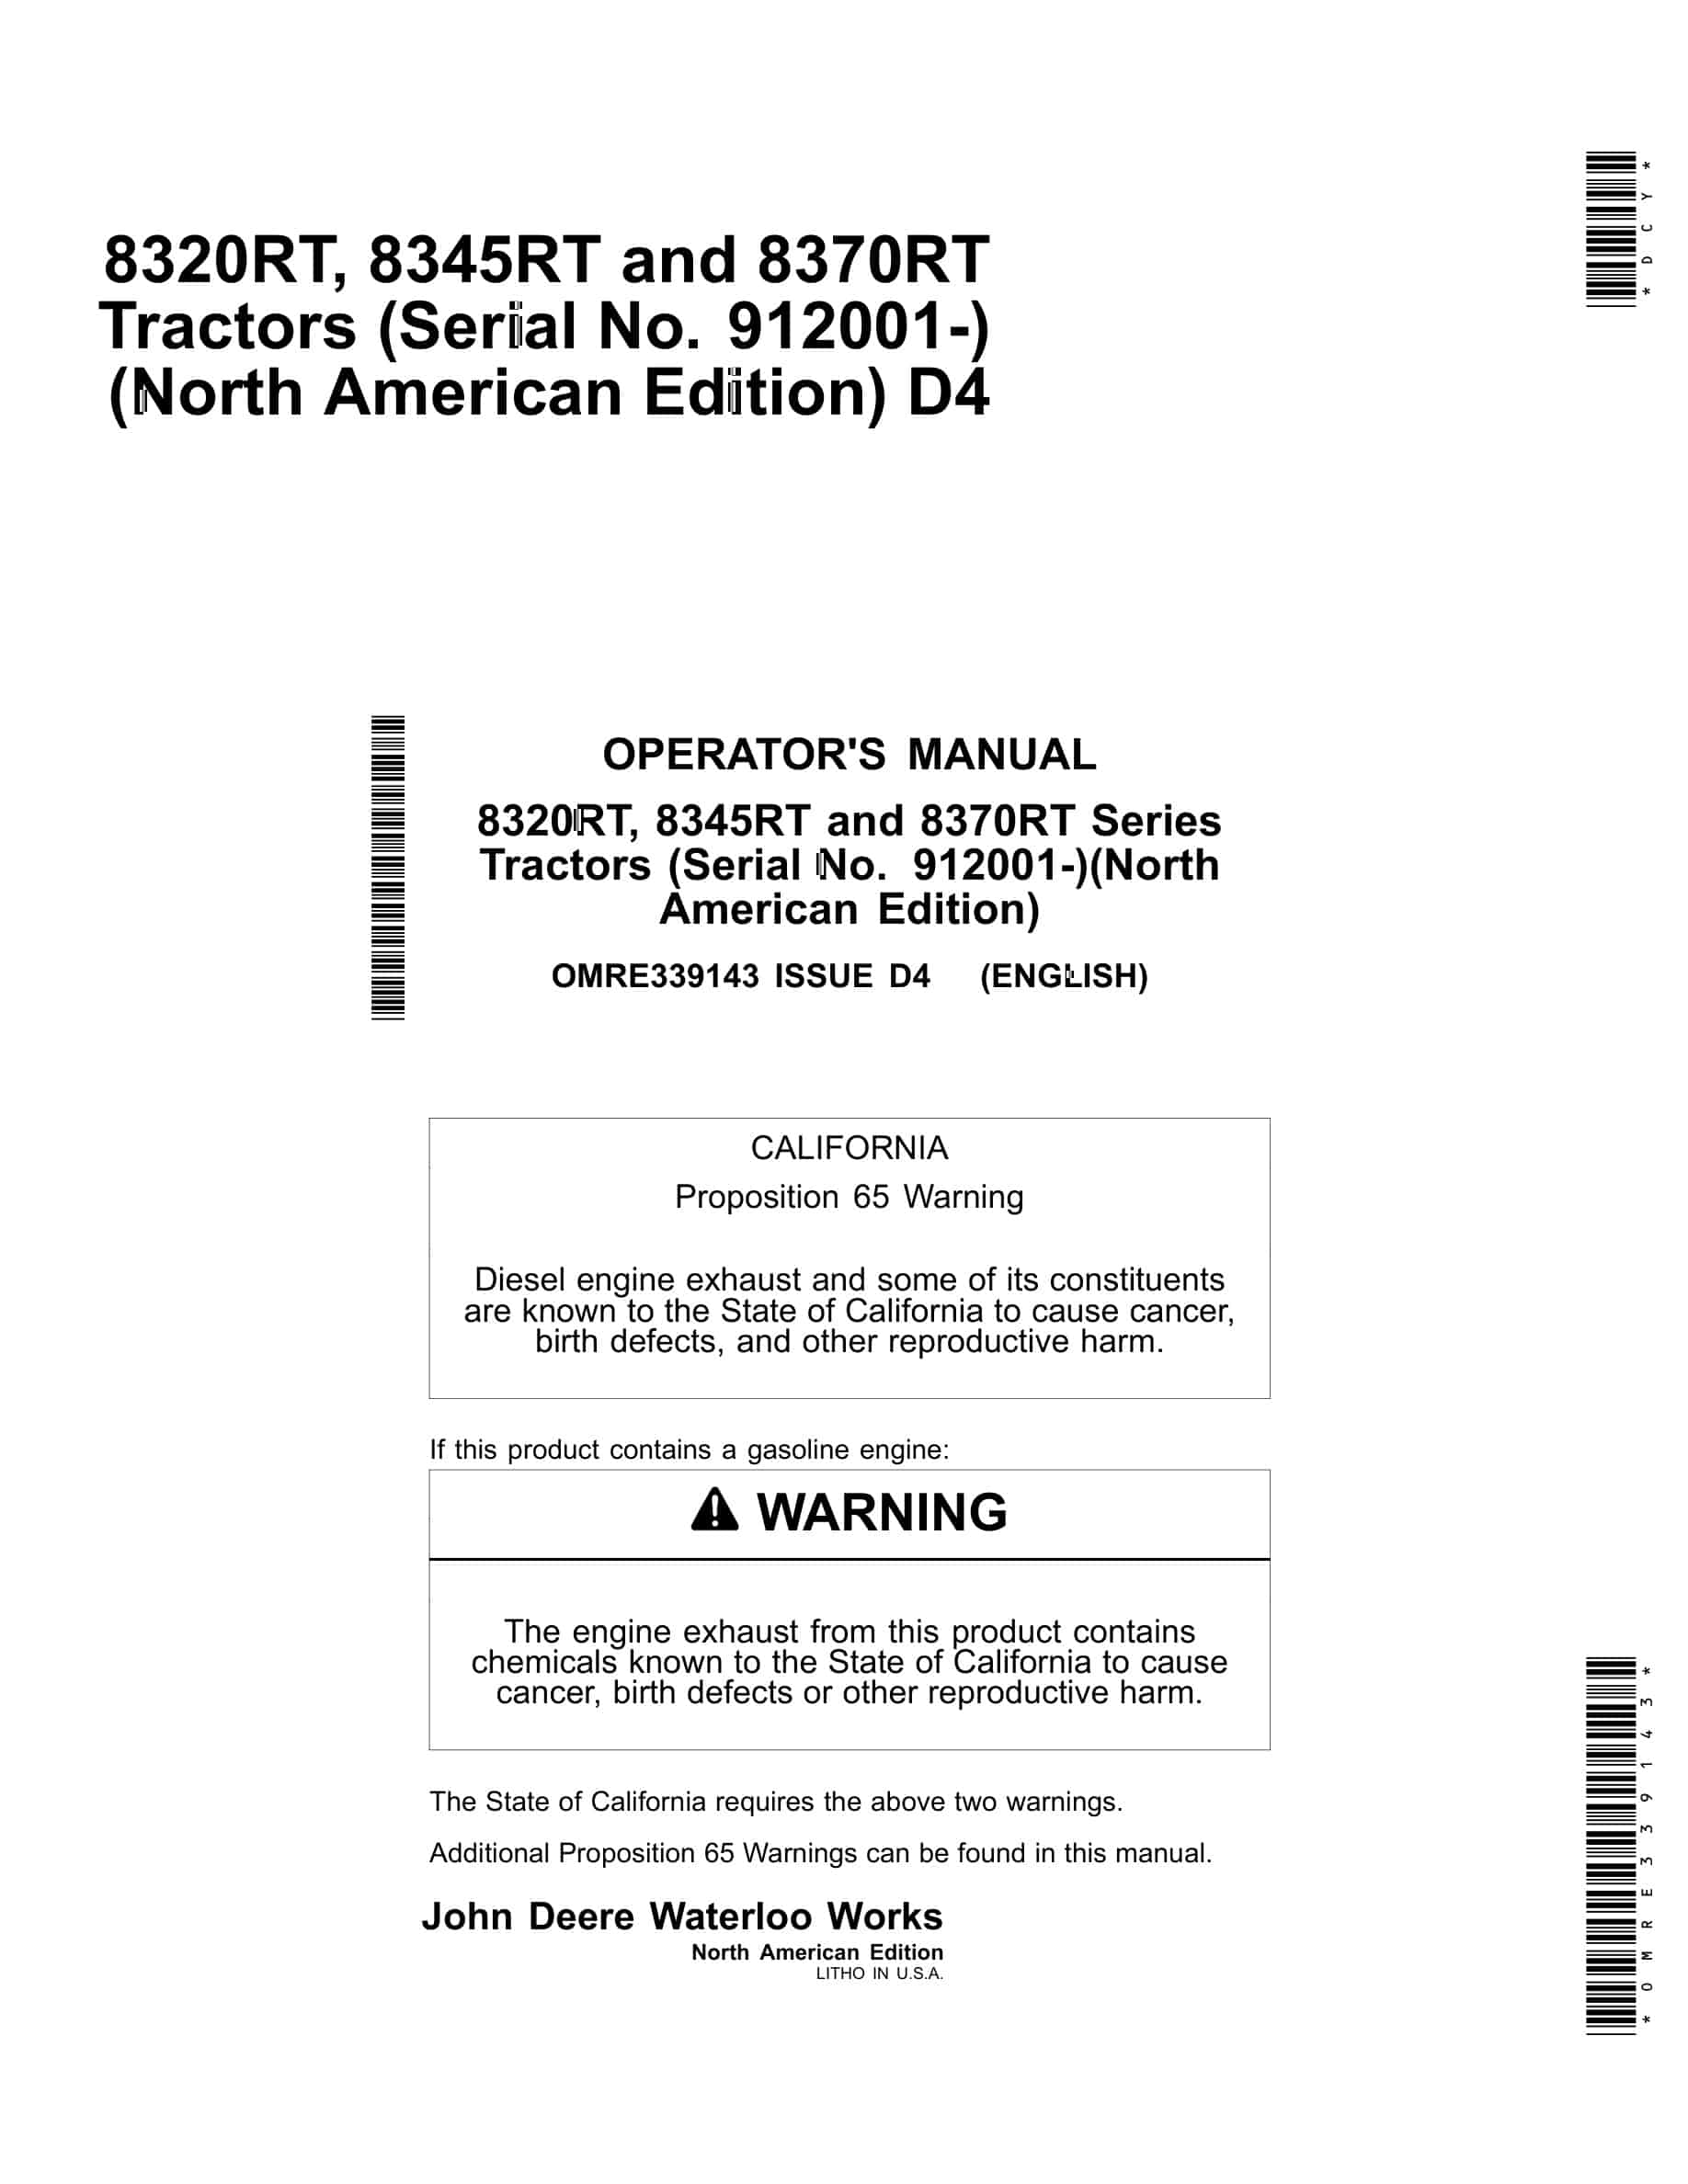 John Deere 8320RT, 8345RT and 8370RT Tractor Operator Manual OMRE339143-1